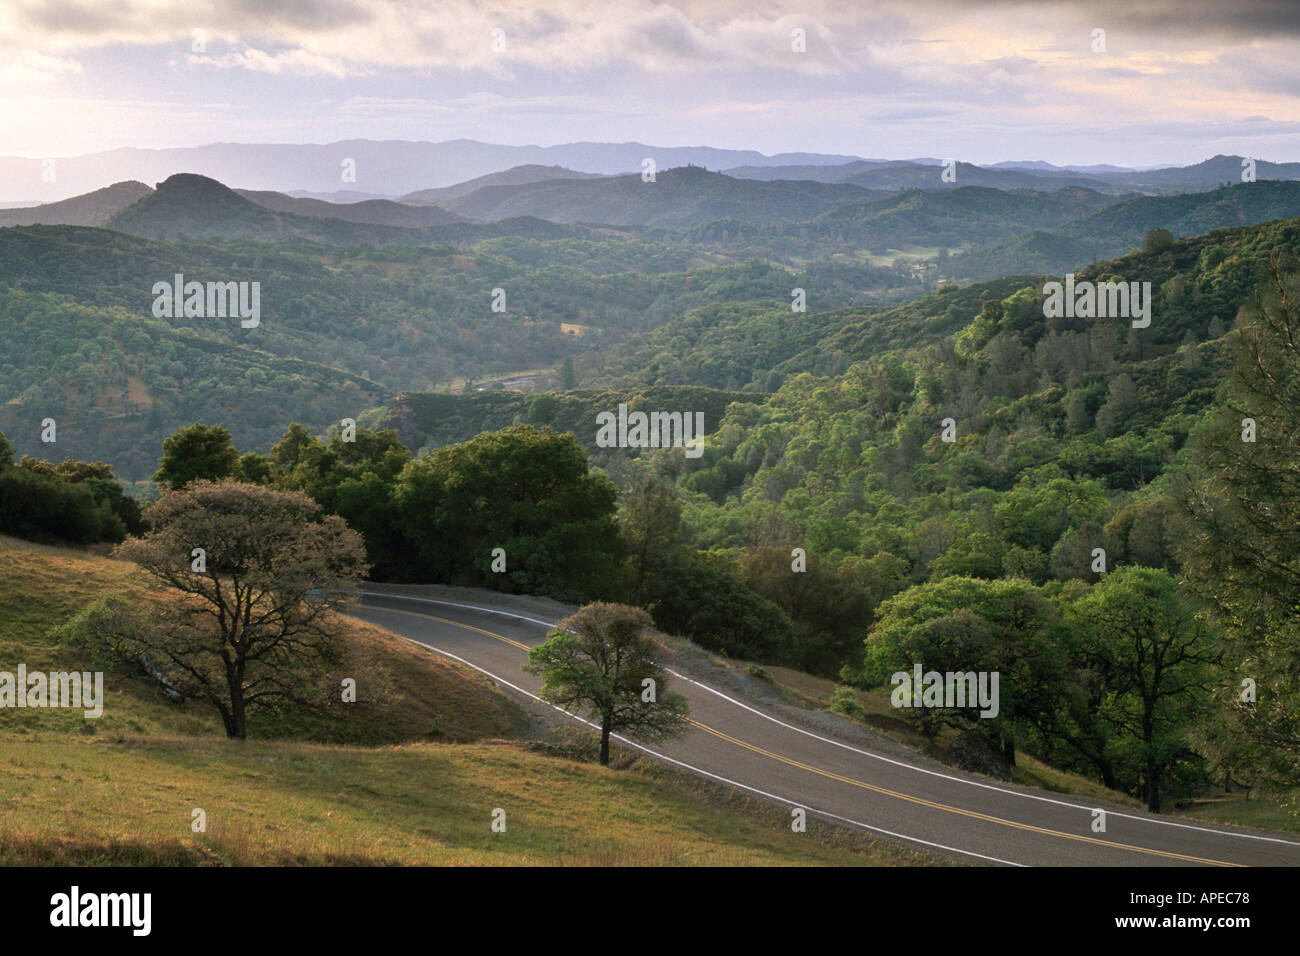 Two lane country road through rugged rural hills Mount Hamilton Santa Clara County California Stock Photo